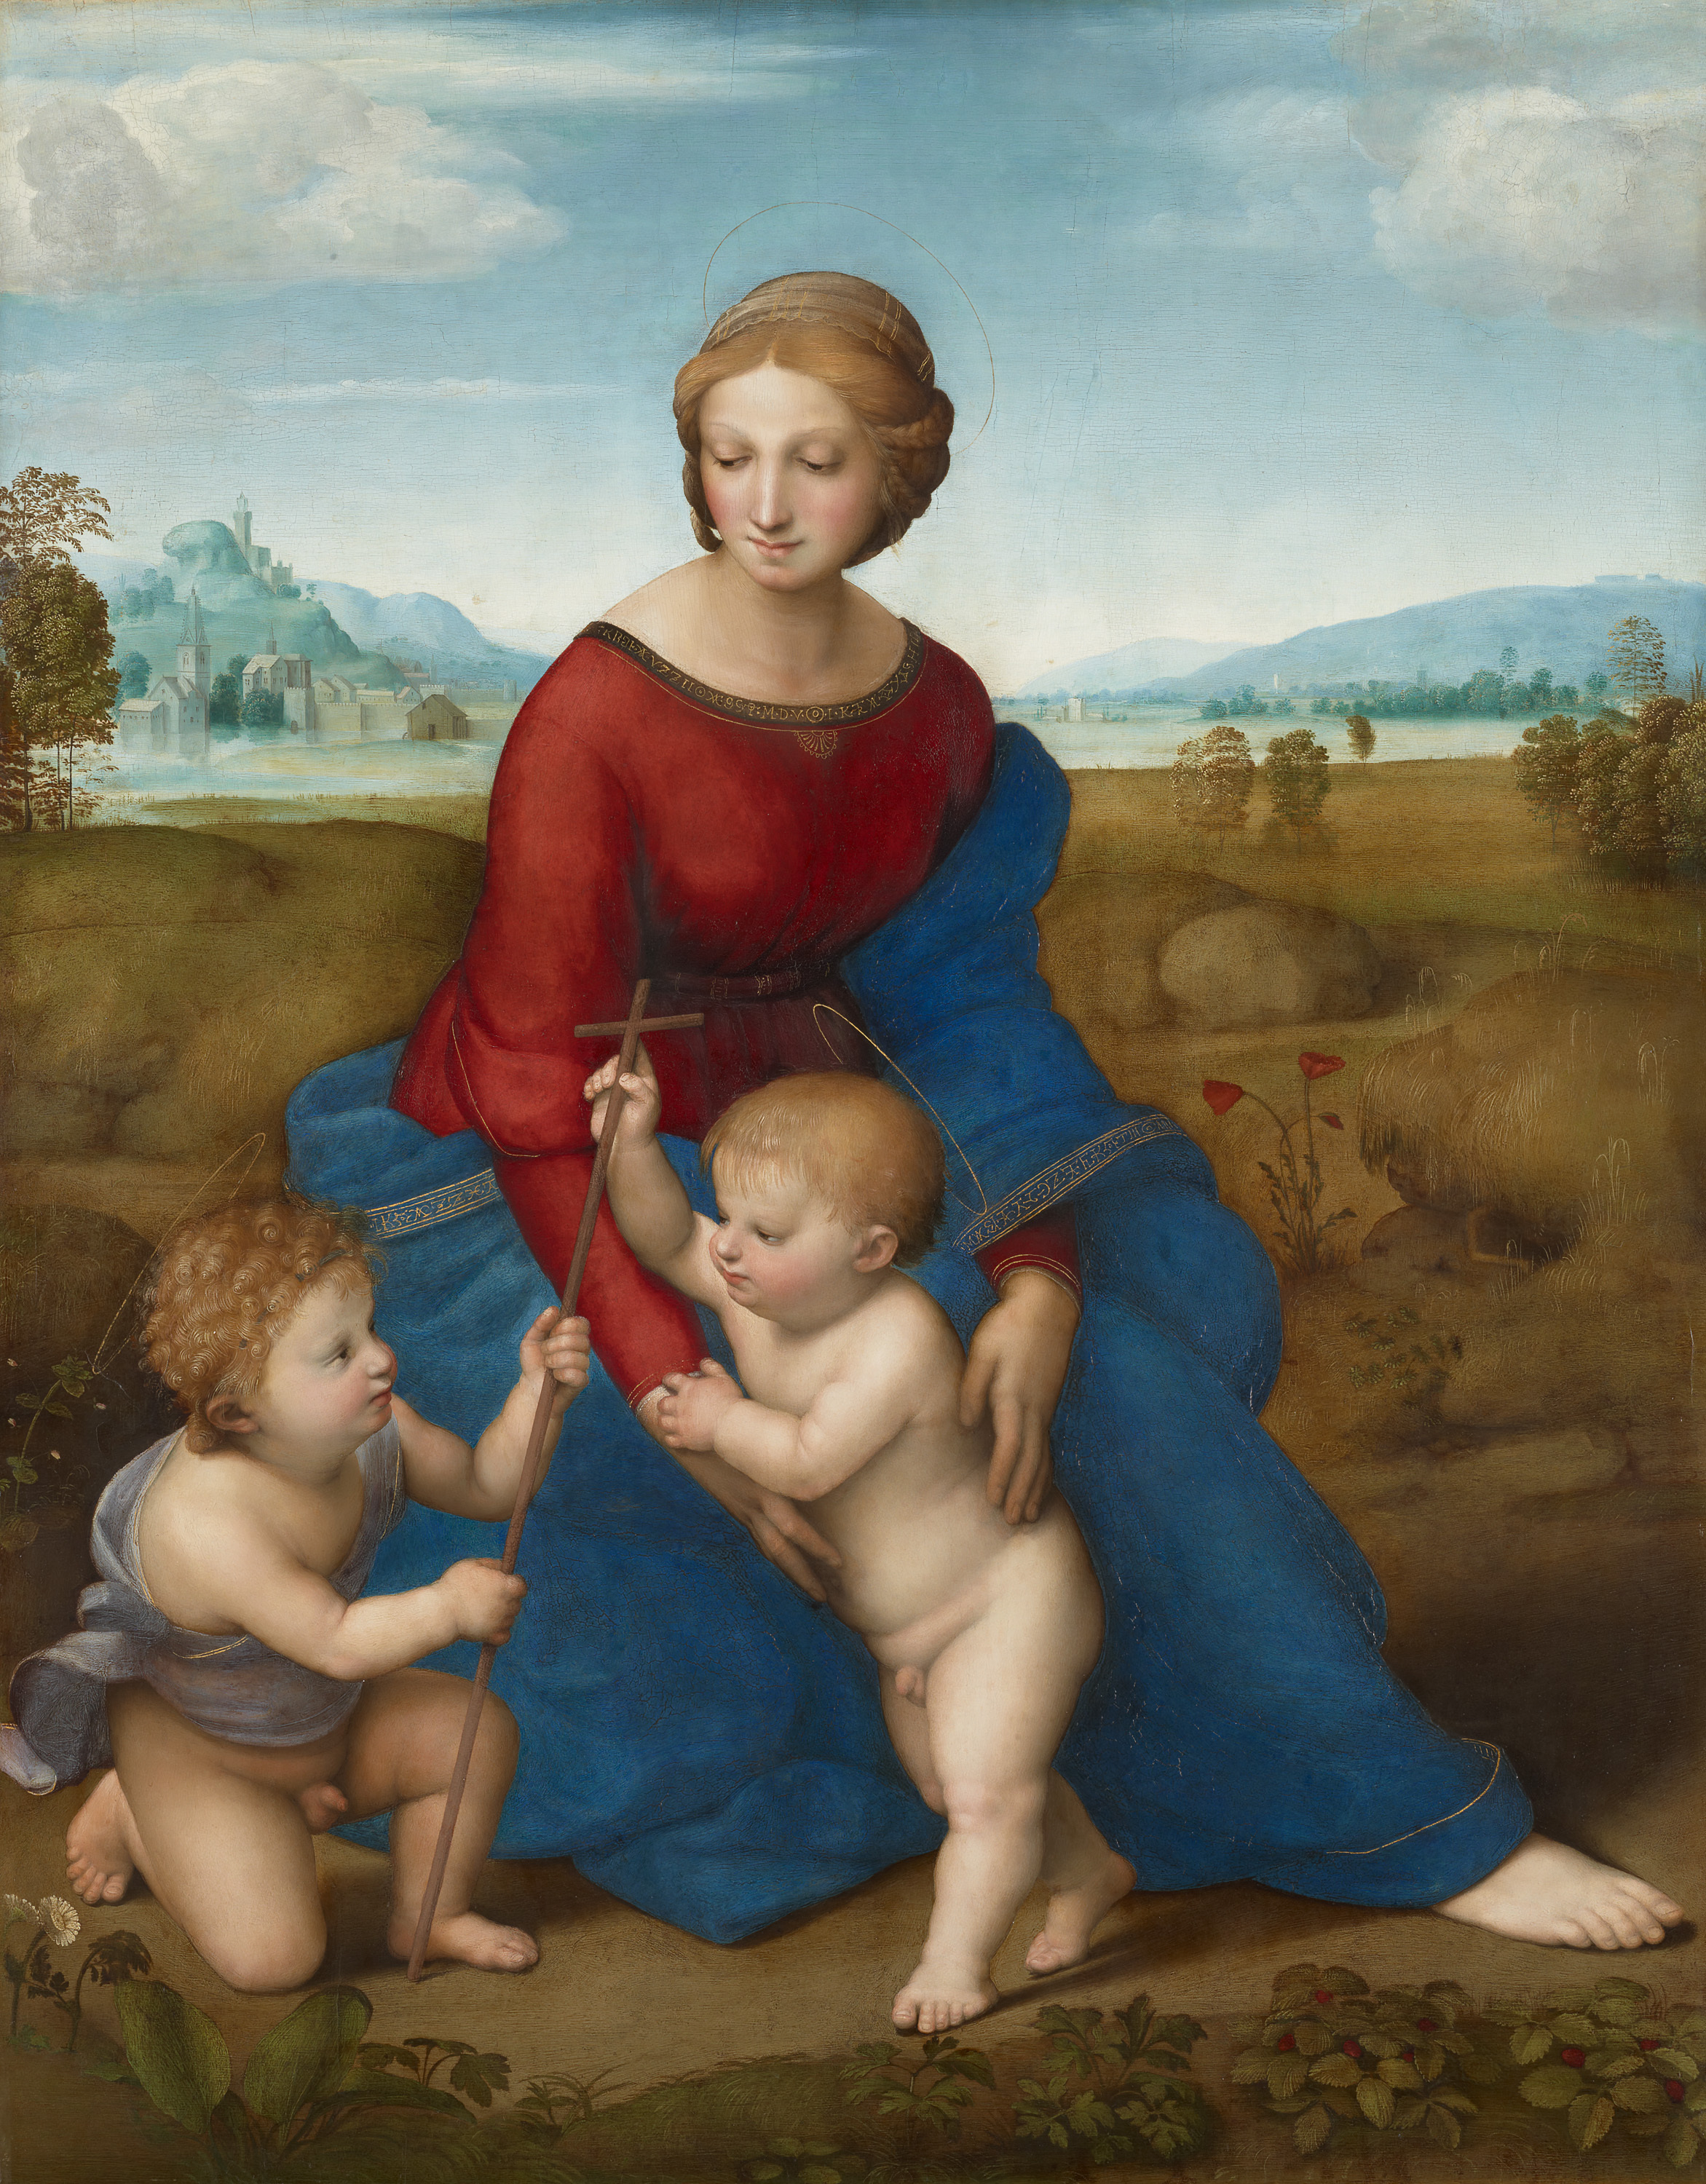 Madonna del Belvedere by Raphael Santi - 1505/1506 - 88,5 x 113 cm Kunsthistorisches Museum